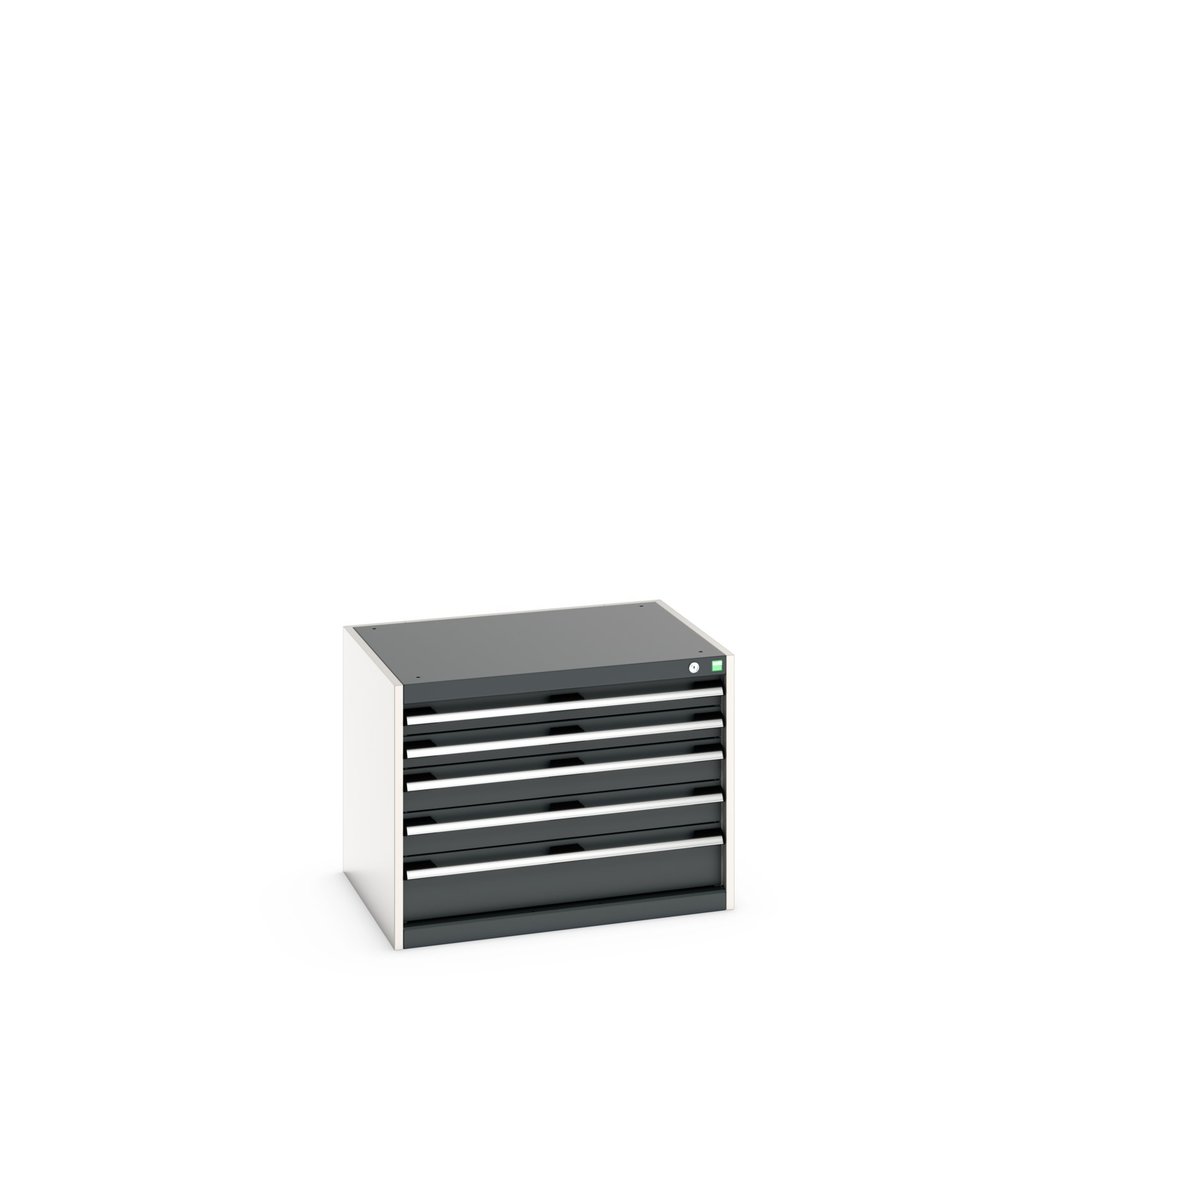 40020135. - cubio drawer cabinet